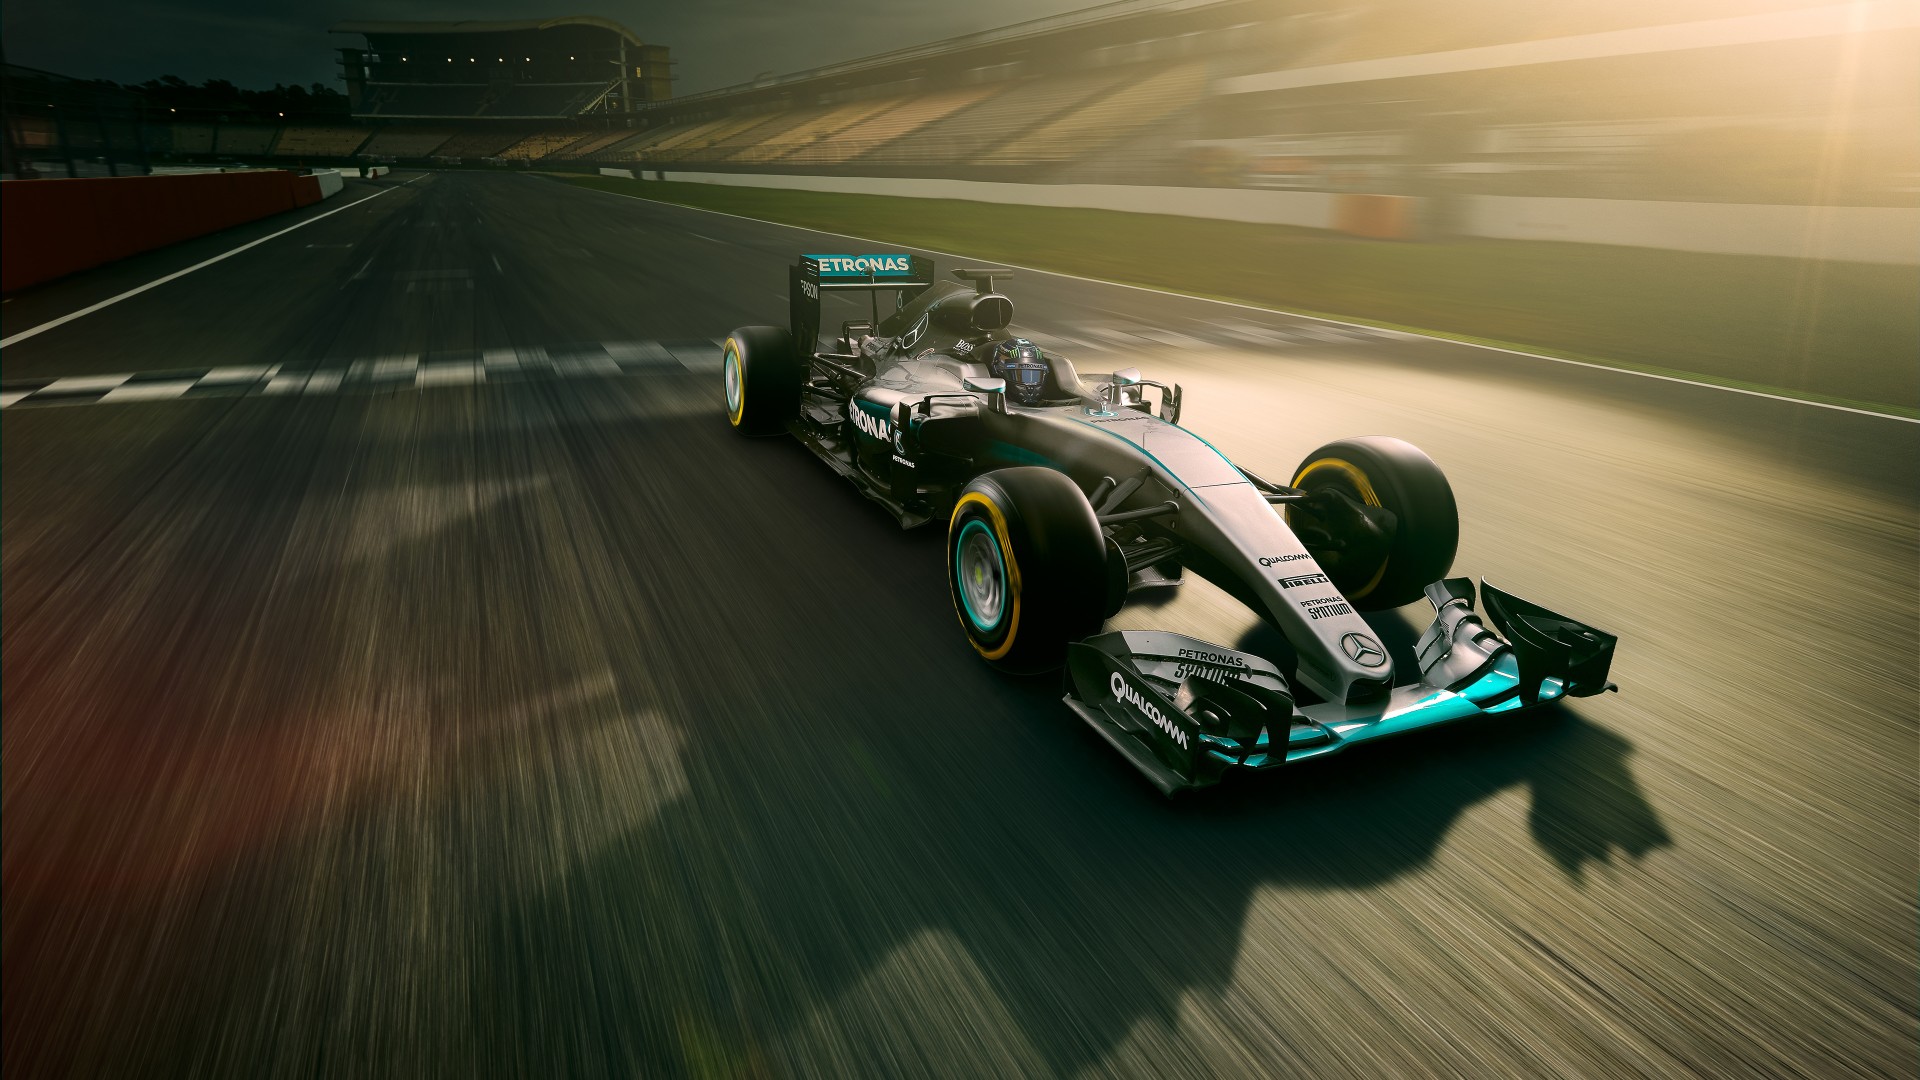 Mercedes F1 in Race track 4K Wallpaper | HD Car Wallpapers | ID #11537